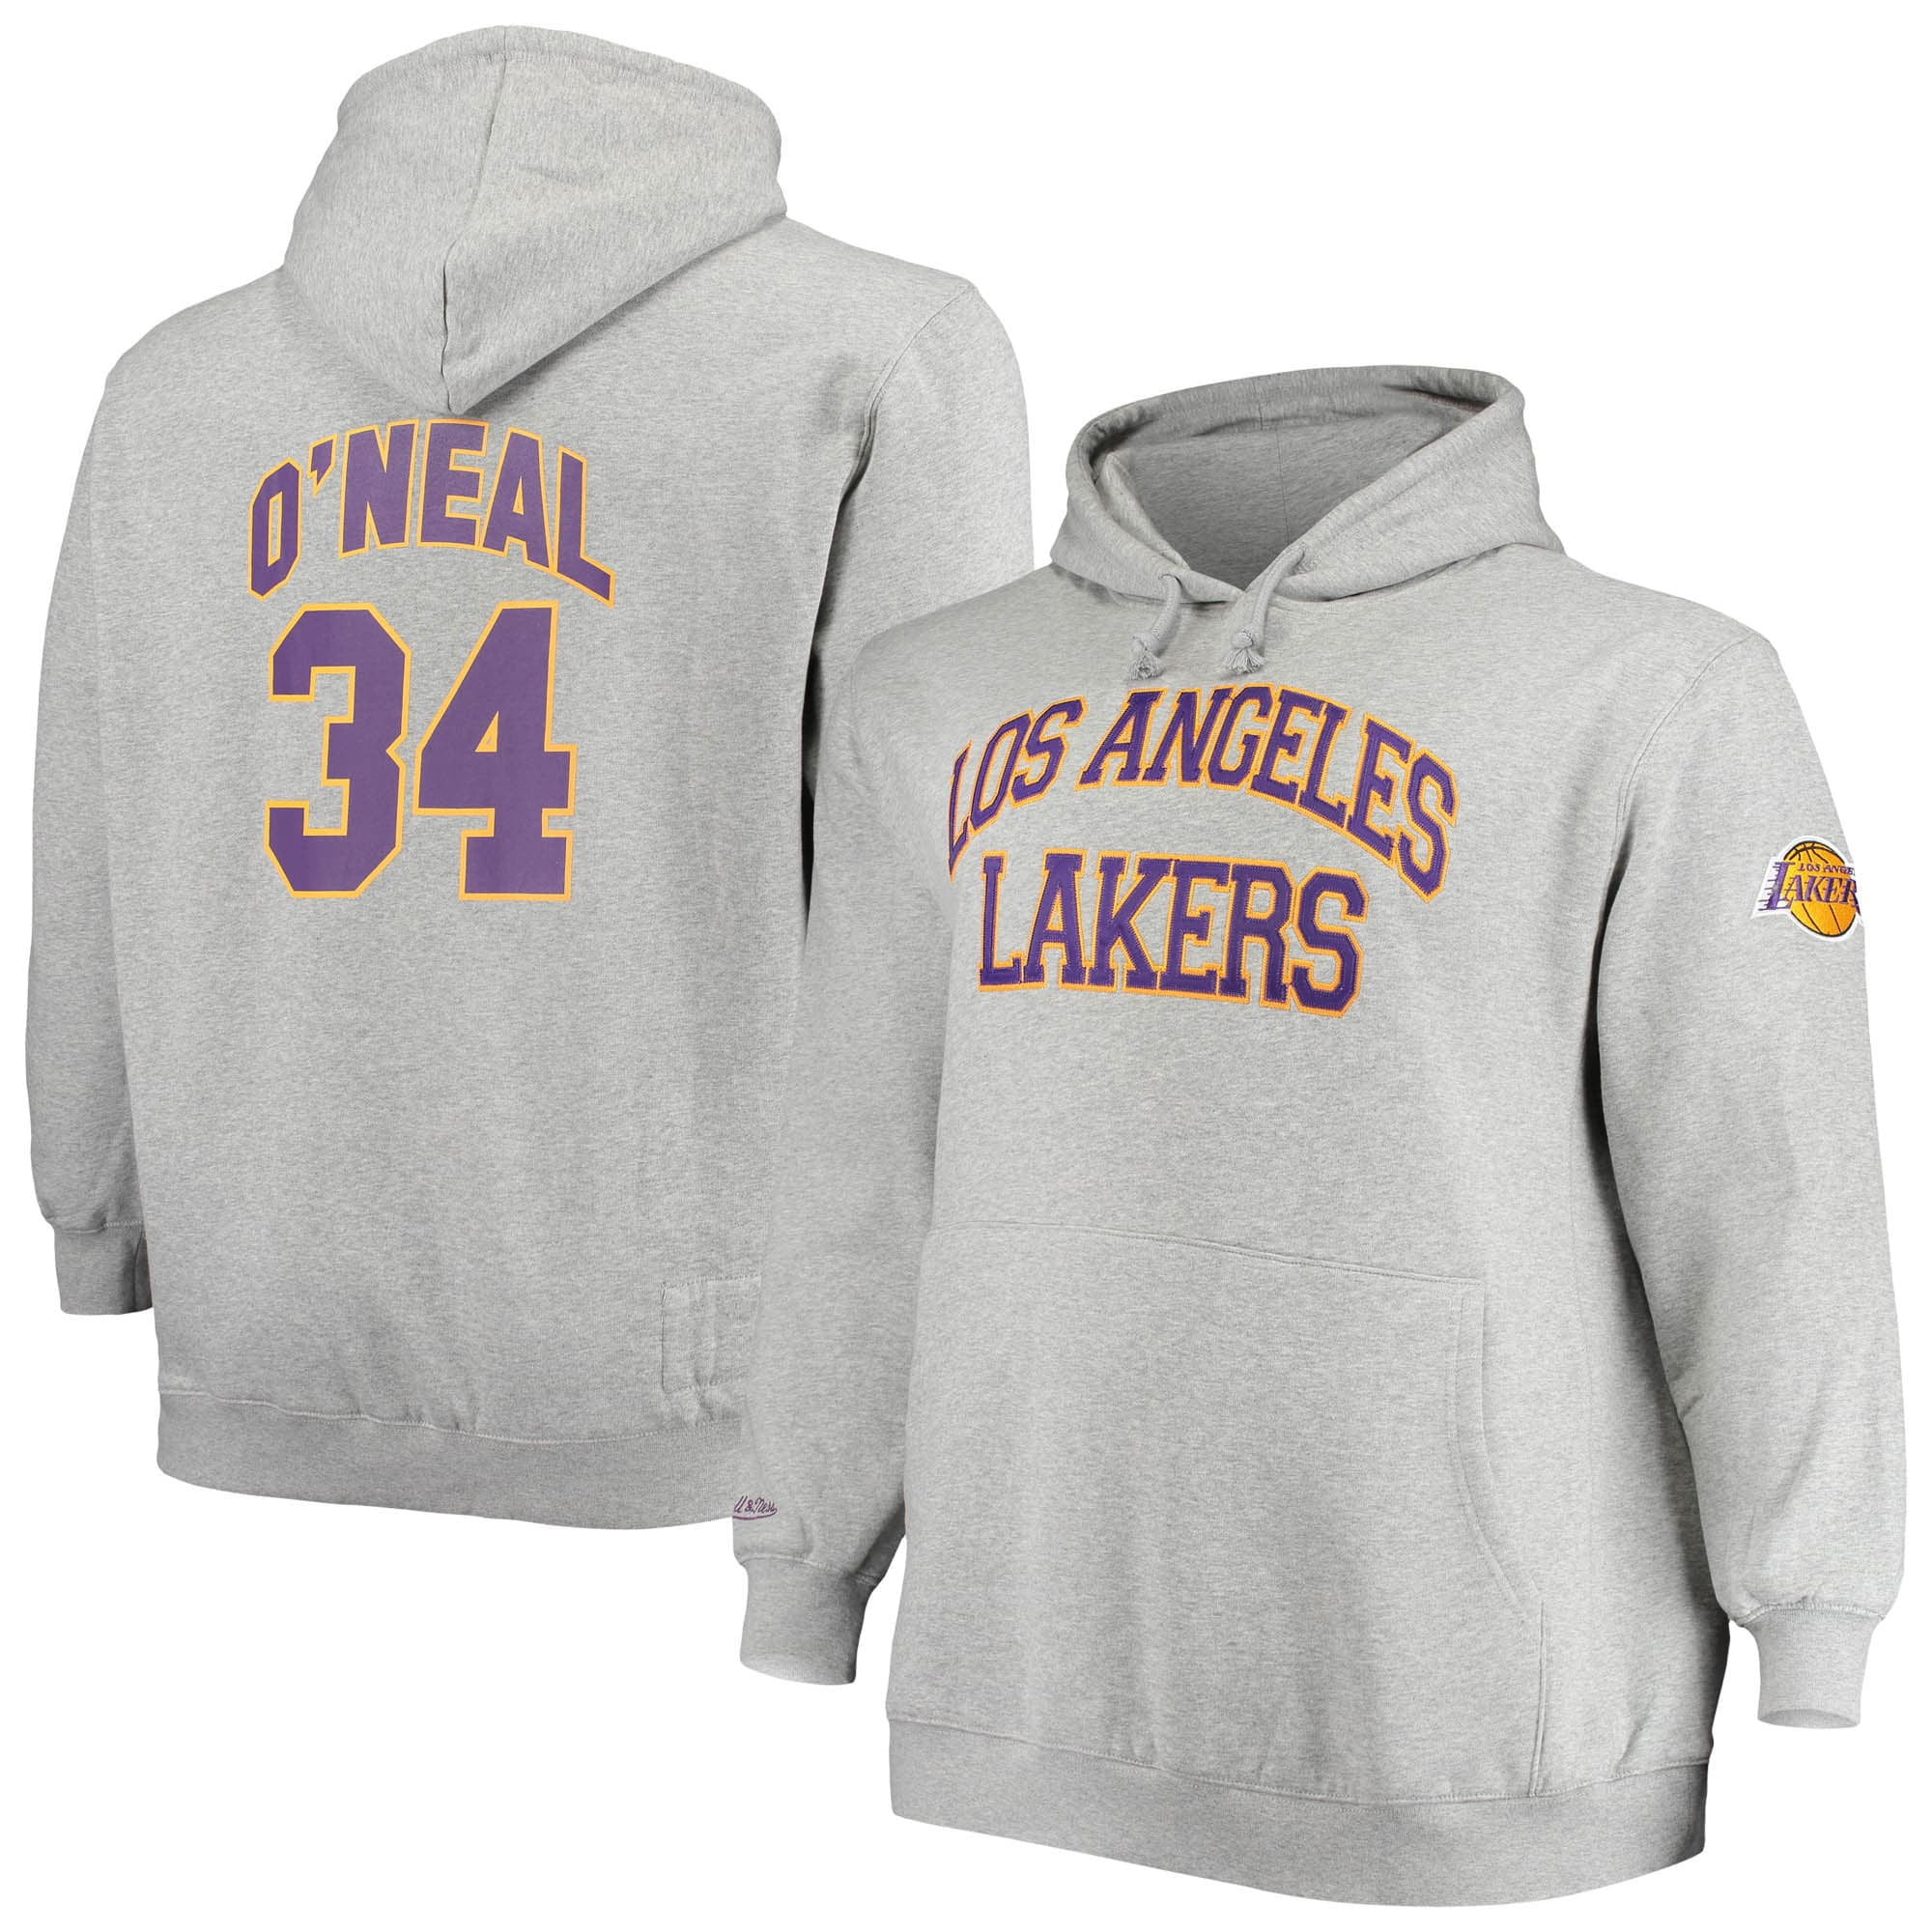 Los Angeles Lakers Hoodie from Homage. | Ash | Vintage Apparel from Homage.